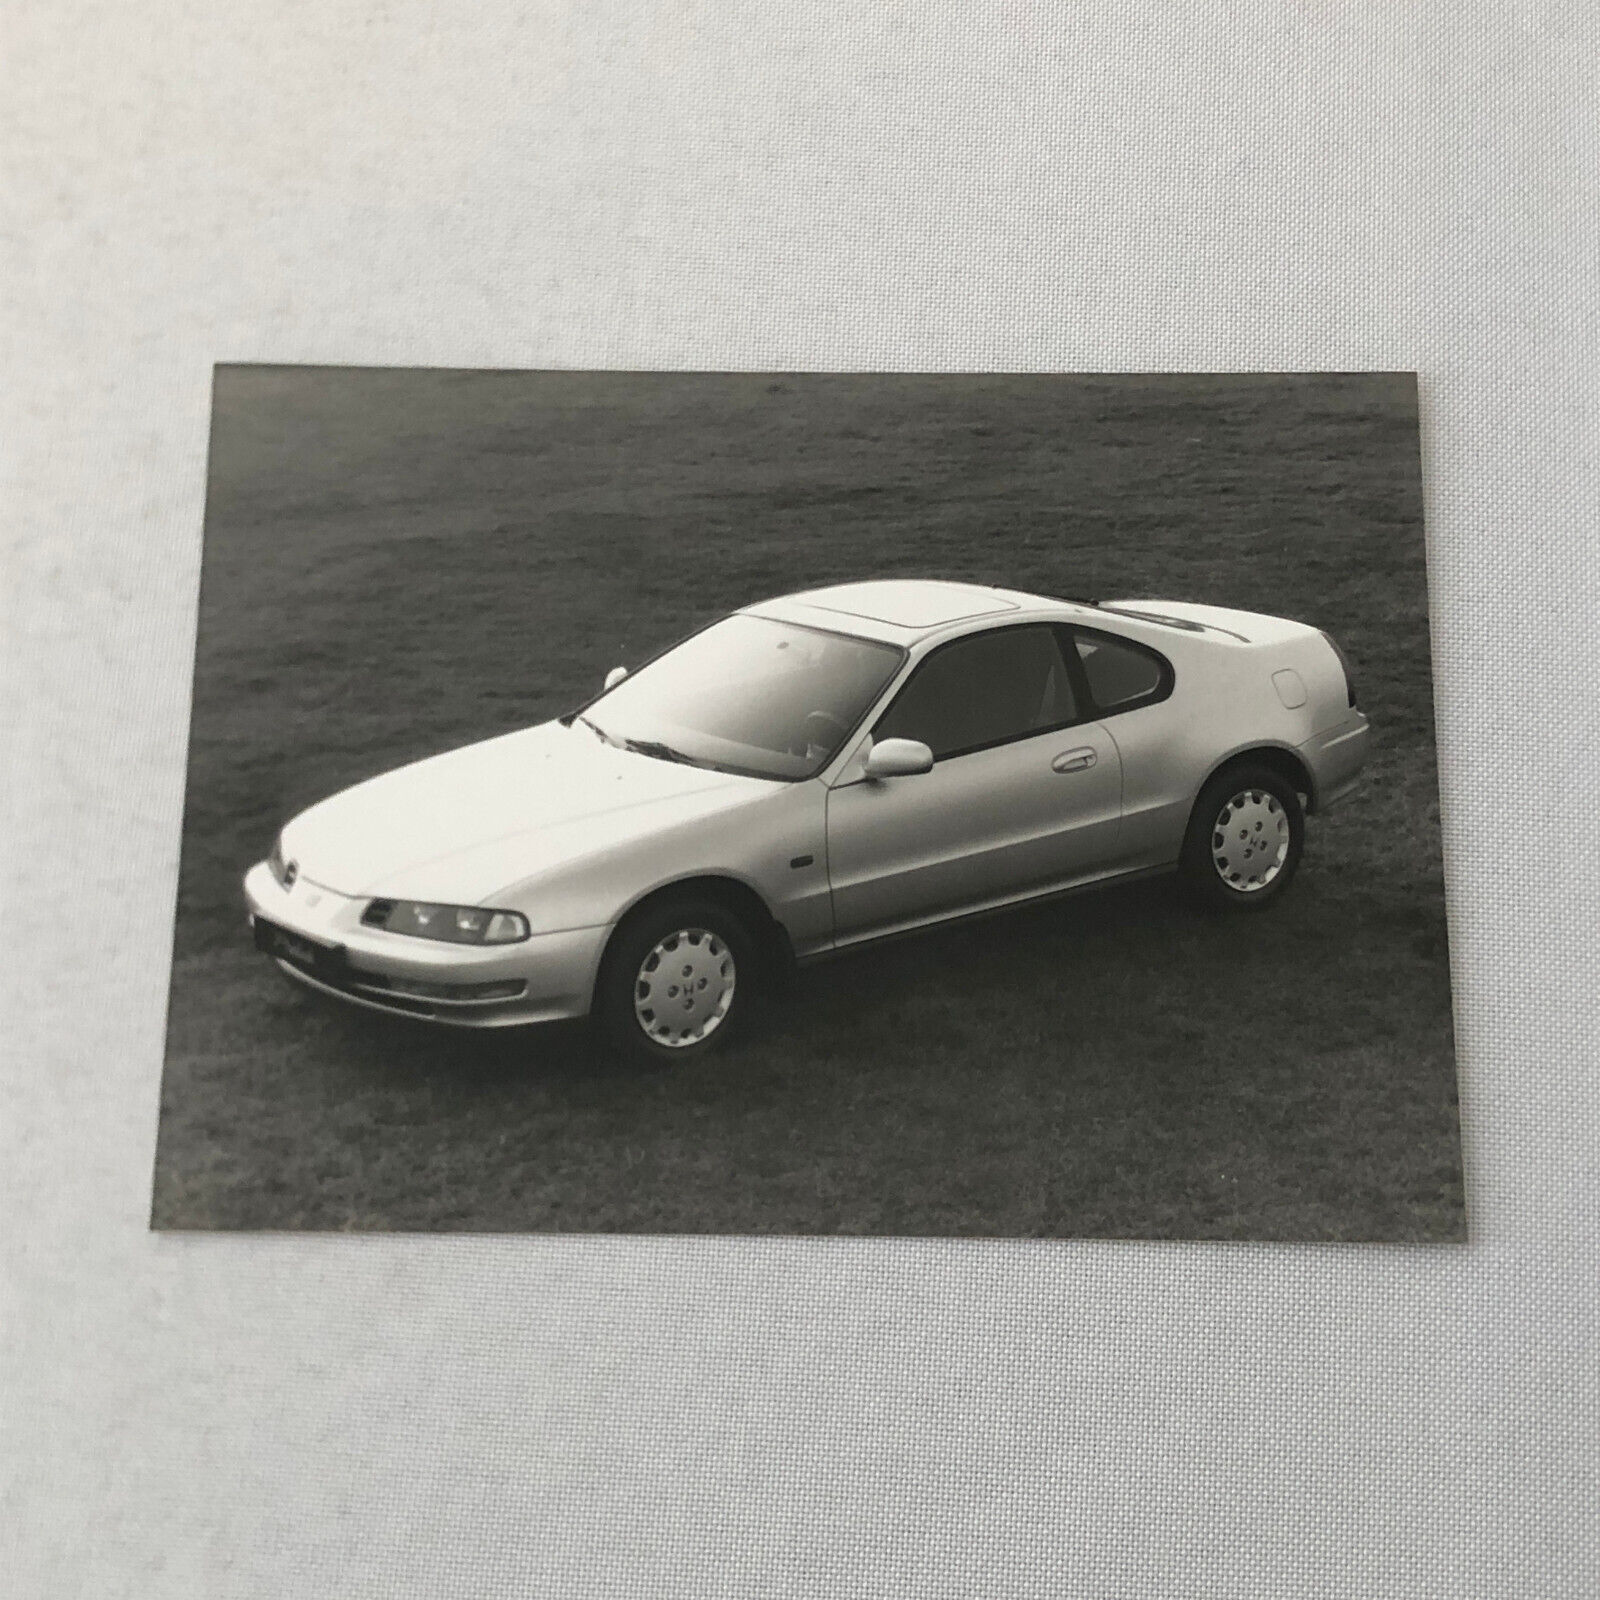 1992 Honda Prelude Car Factory Press Photo Photograph Print